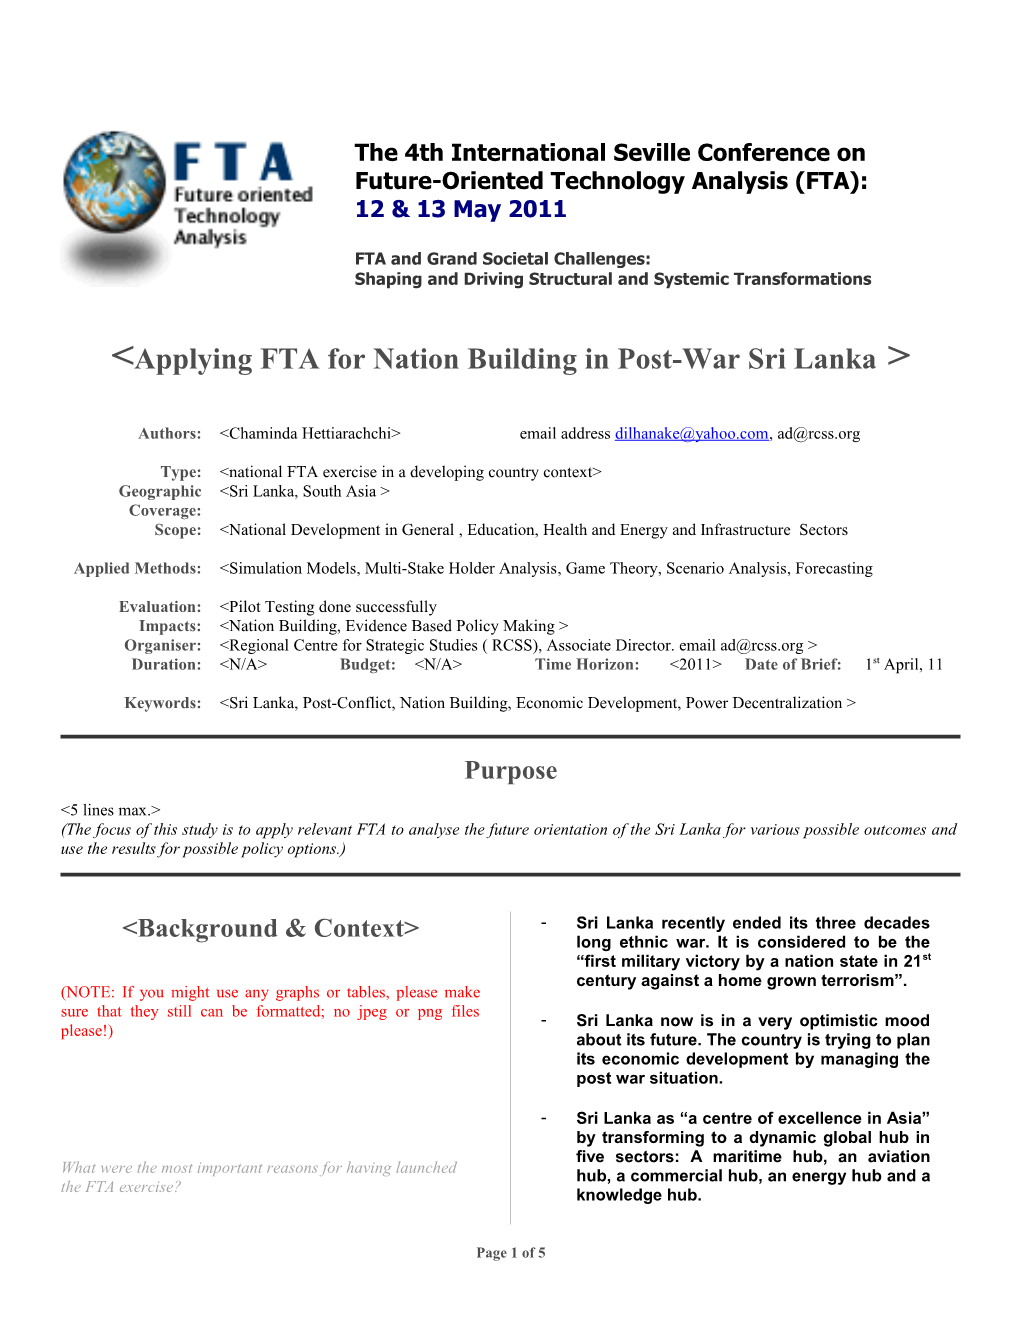 Applying FTA for Nationbuilding in Post-War Sri Lanka